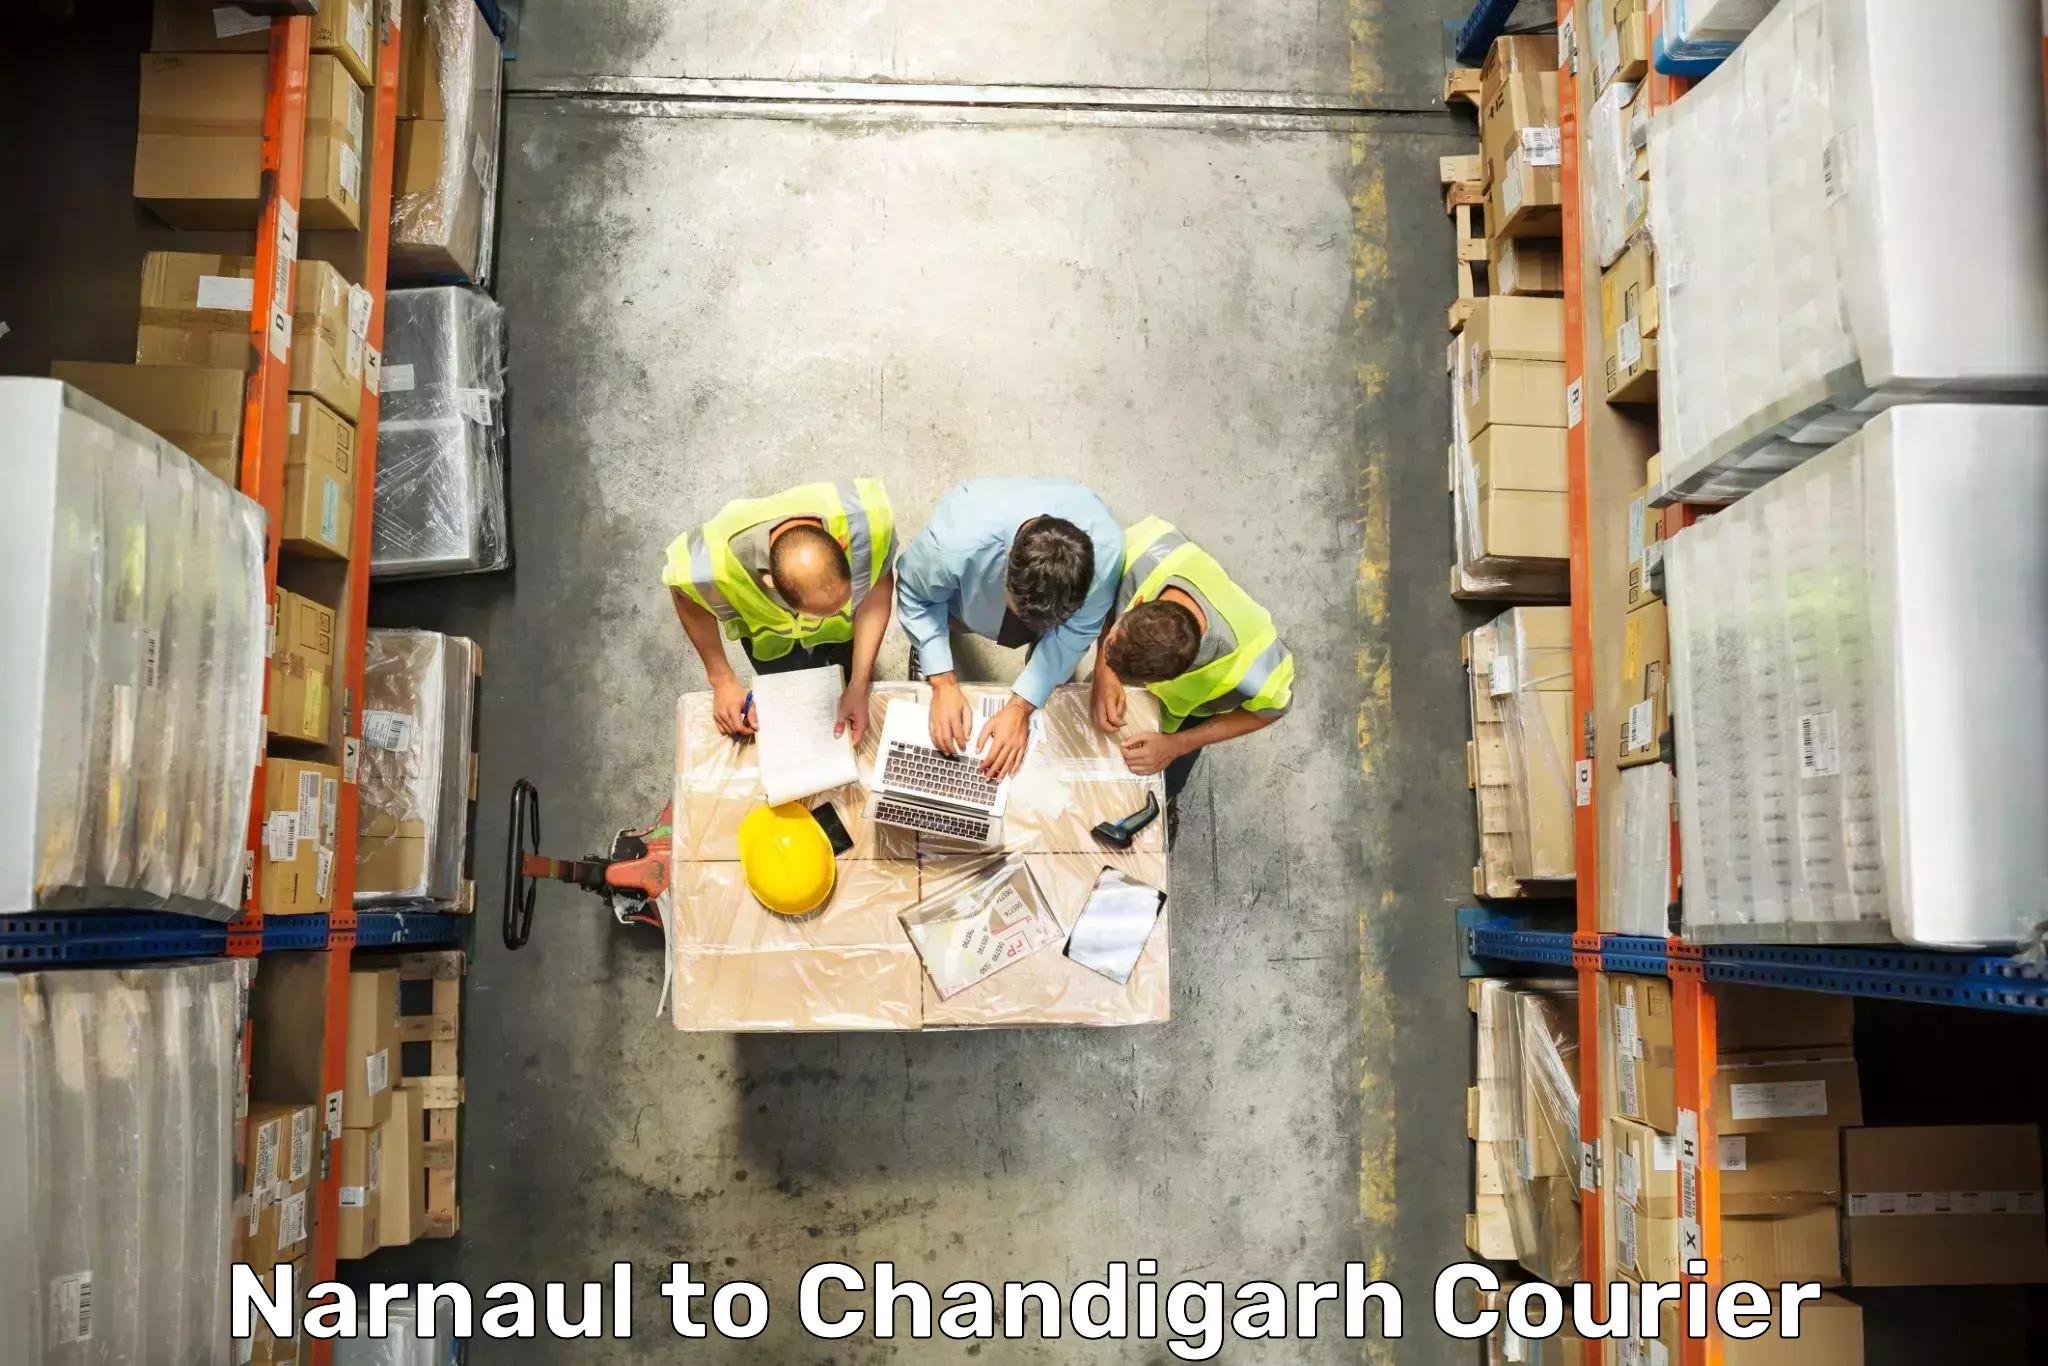 Luggage transport company Narnaul to Chandigarh